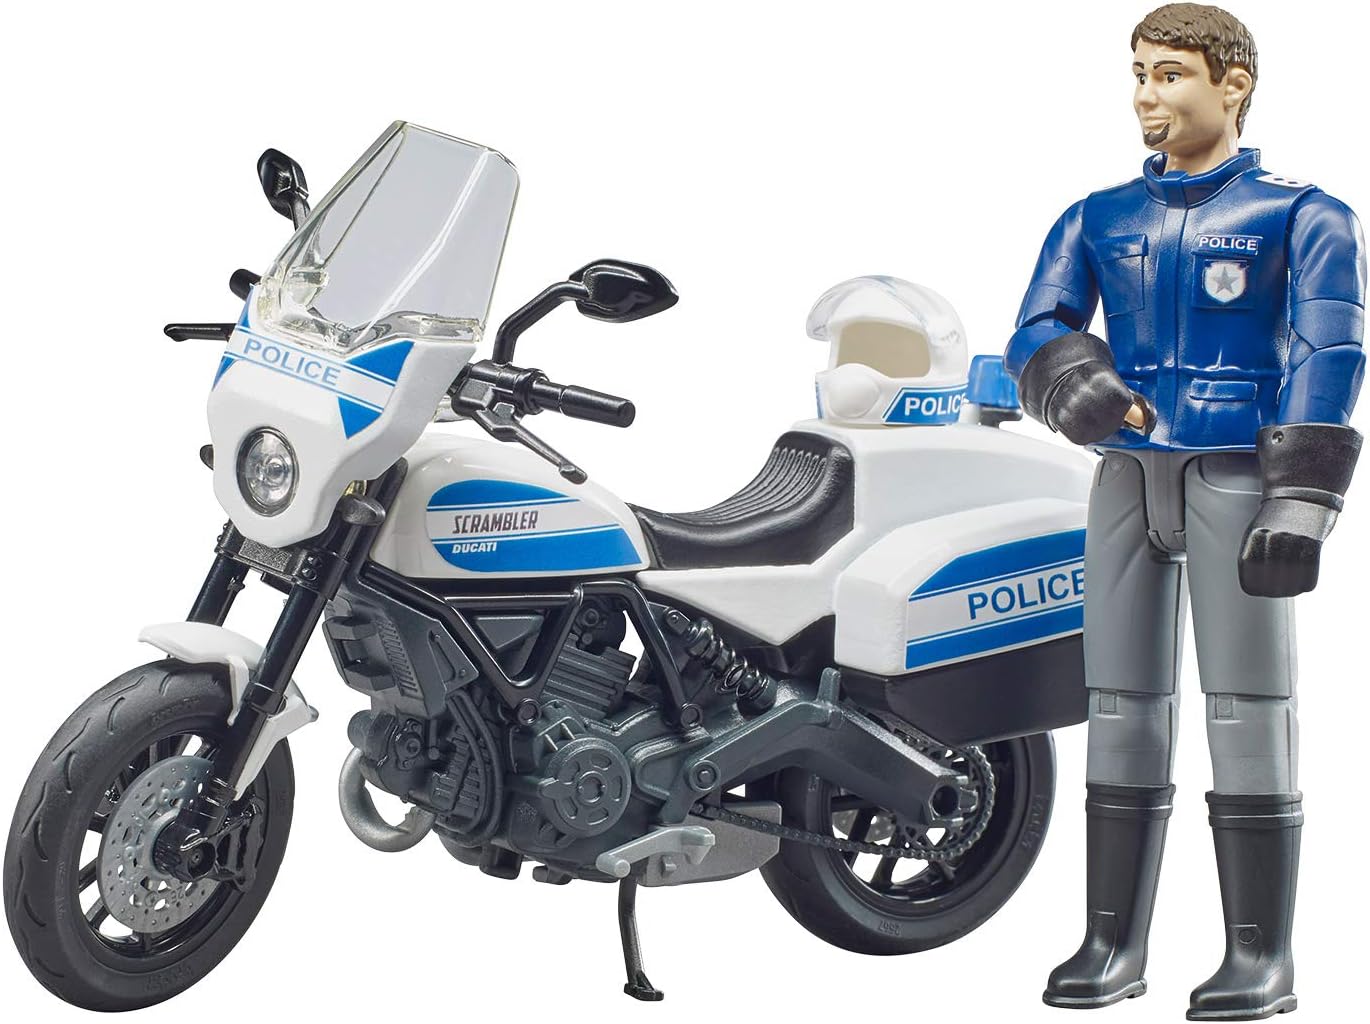 Scrambler Ducati Police